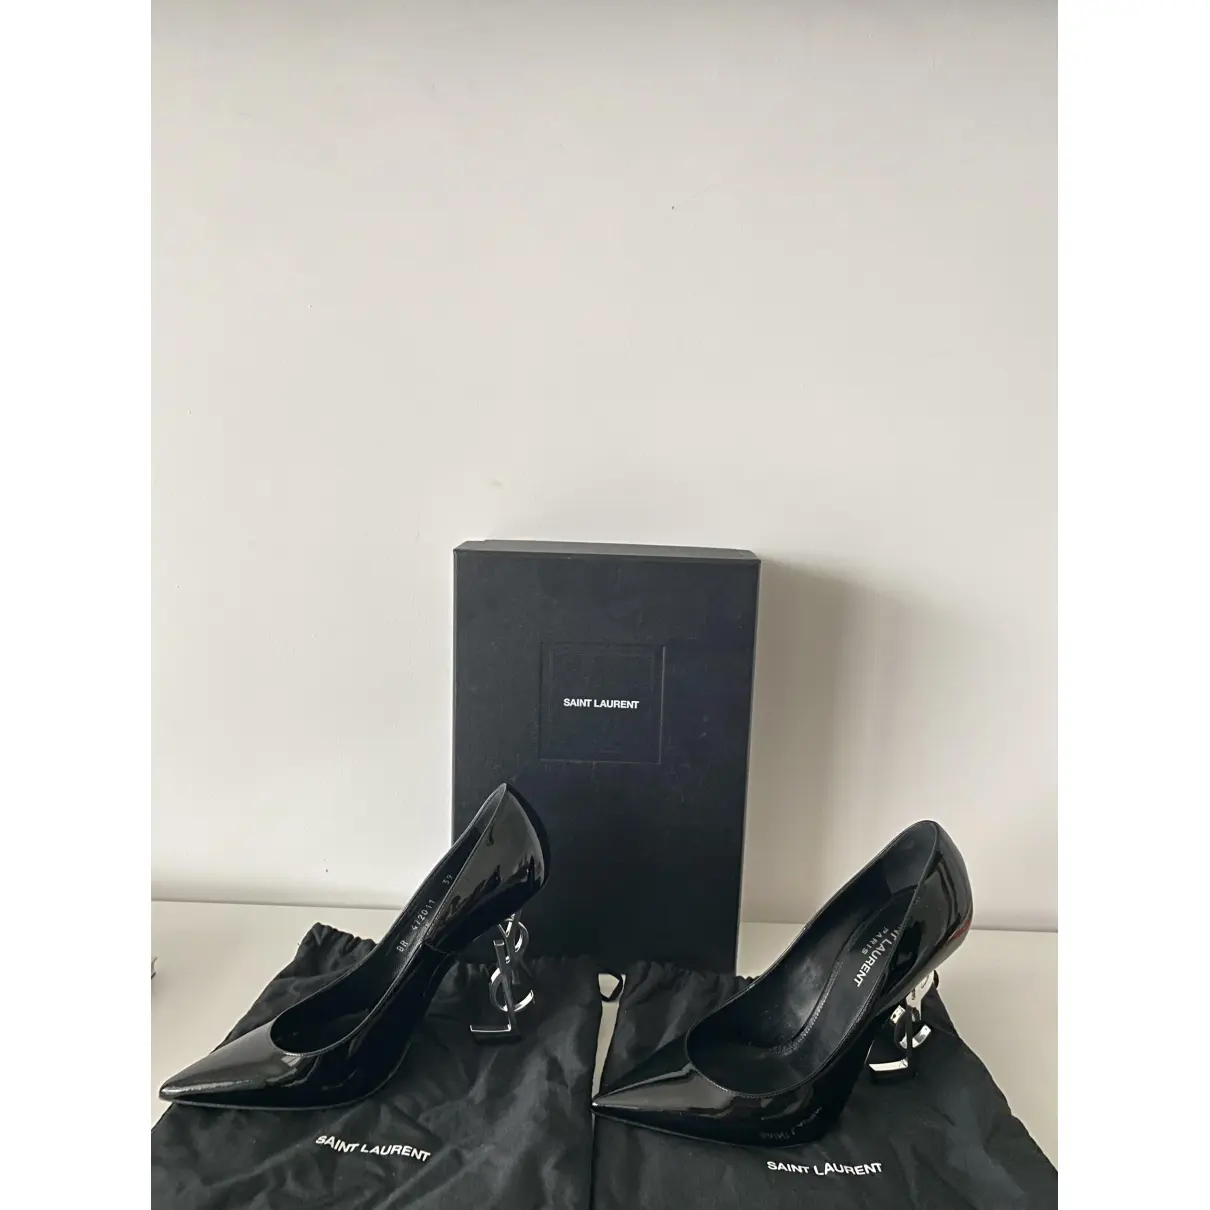 Opyum patent leather heels Saint Laurent